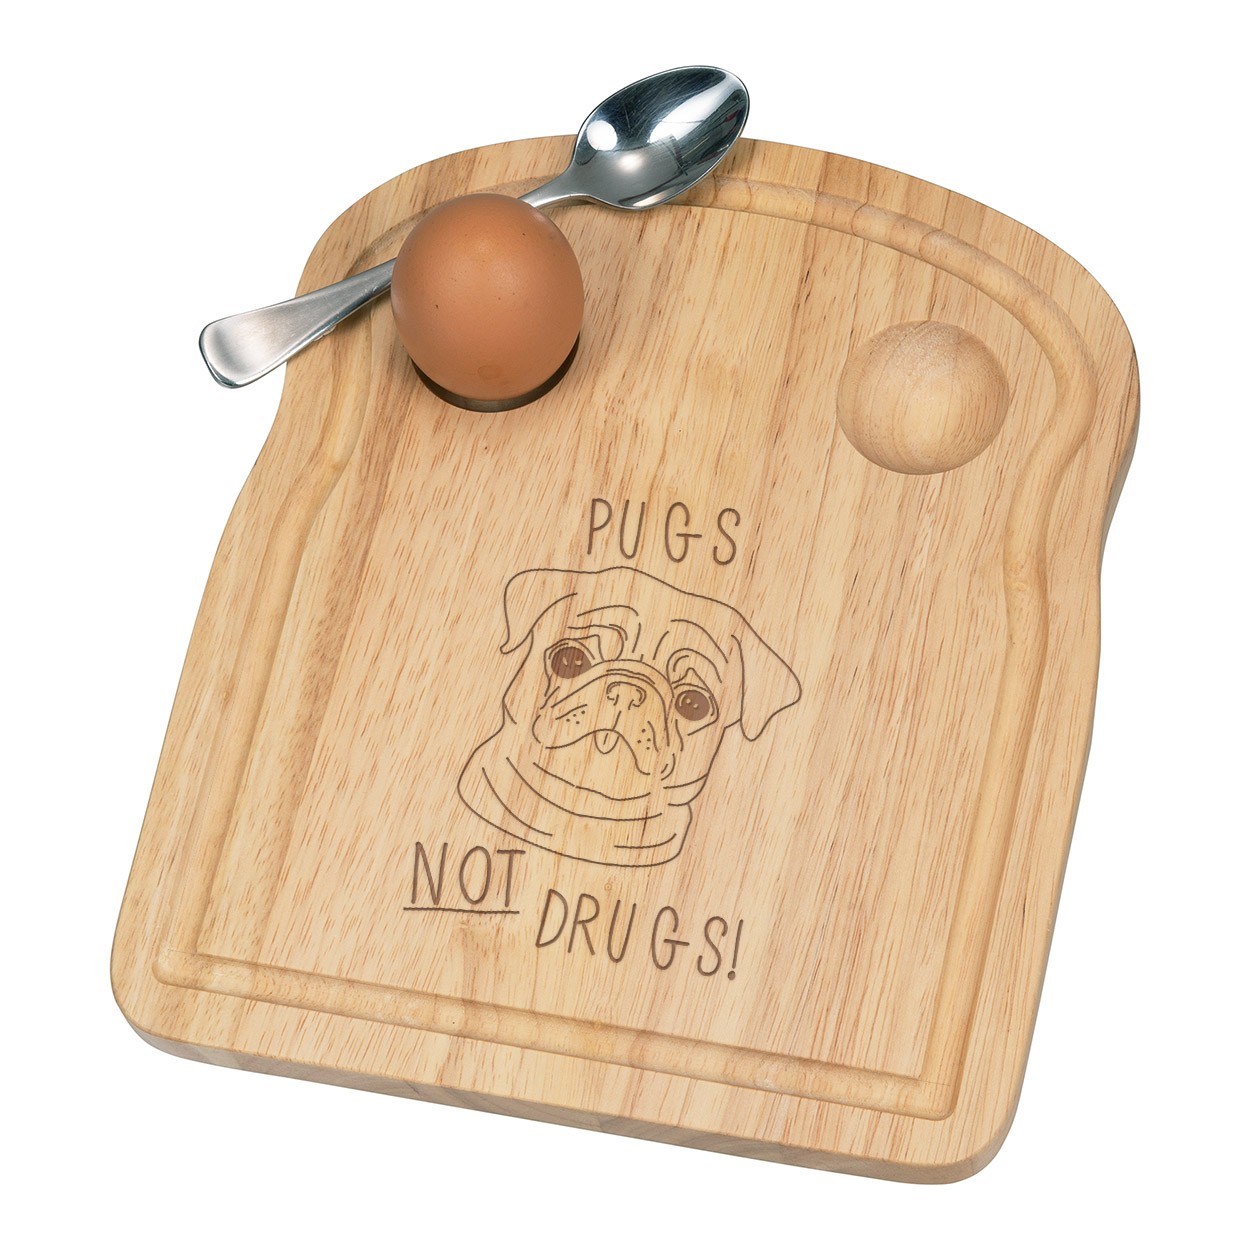 Pugs Not Drugs Breakfast Dippy Egg Cup Board Wooden